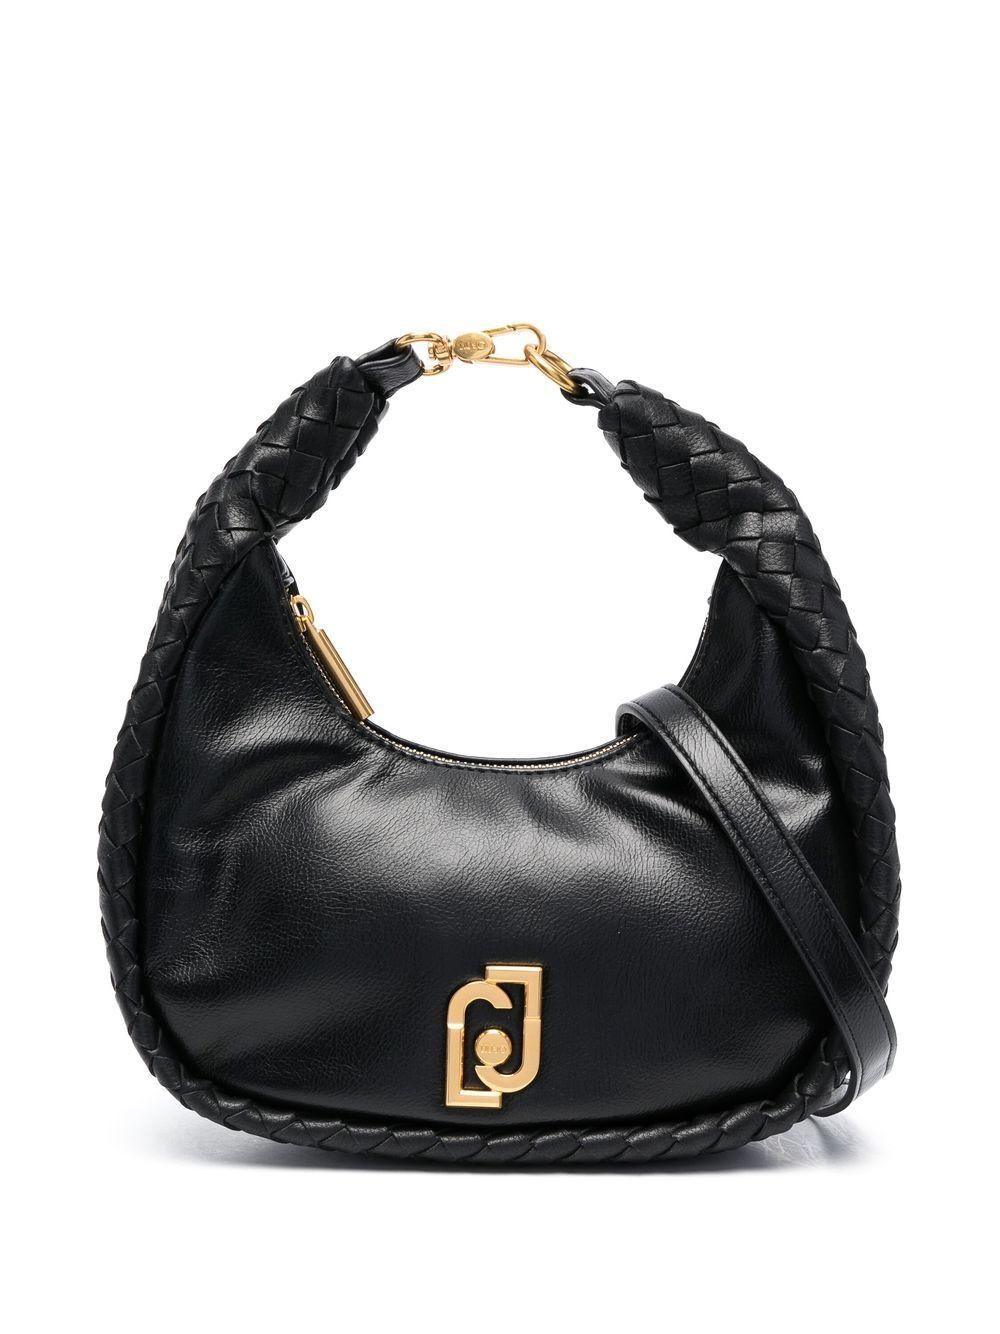 Liu Jo Braided Faux-leather Shoulder Bag in Black | Lyst